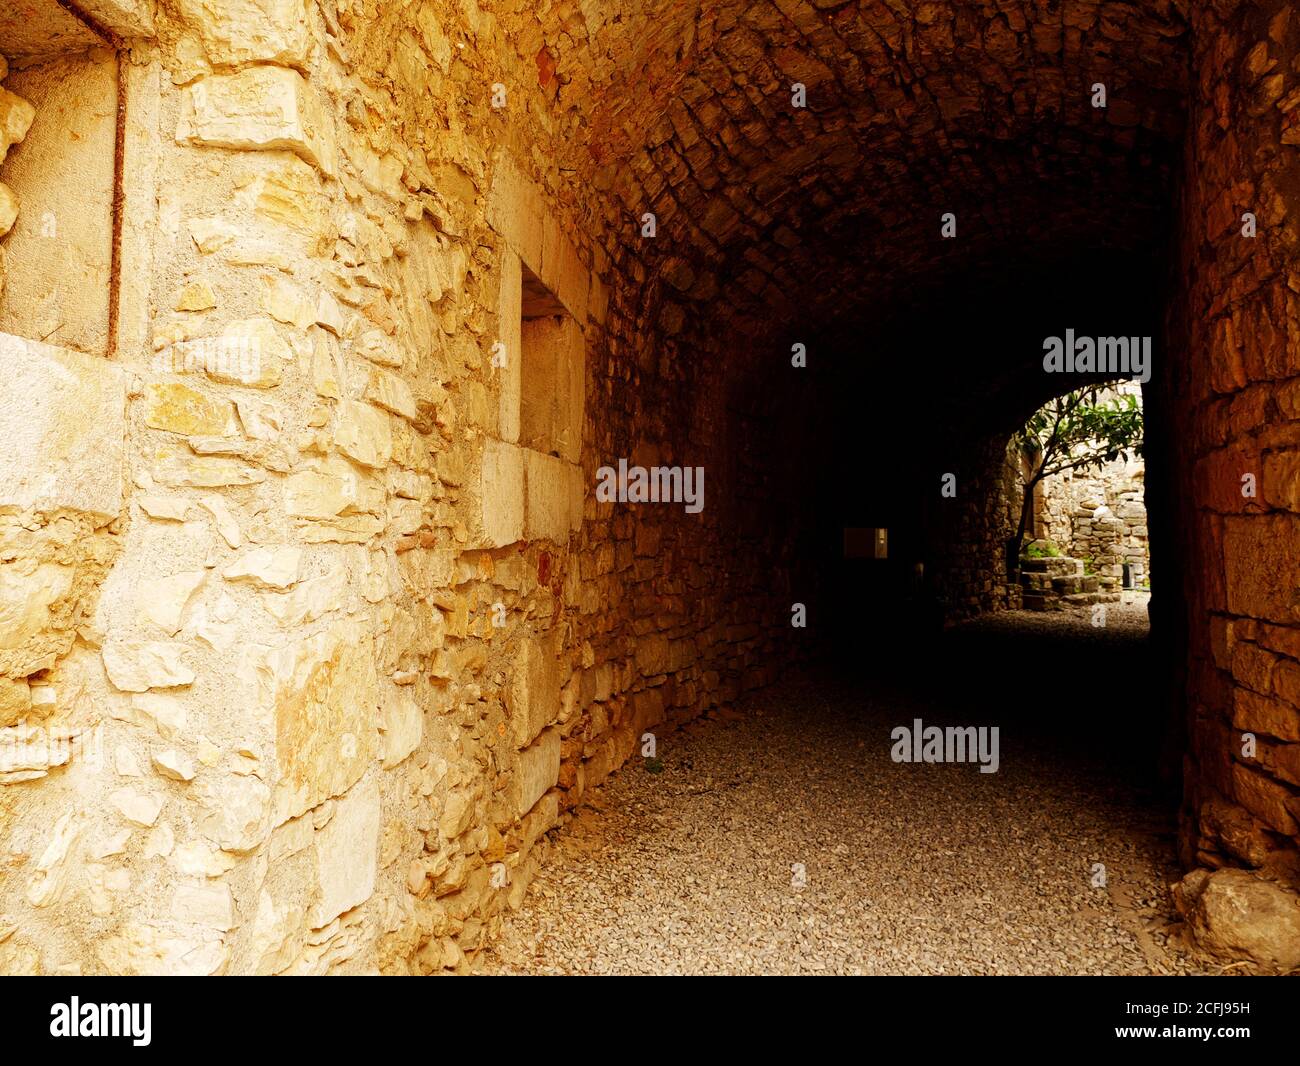 Dark corridor outside in stone in an old village Stock Photo